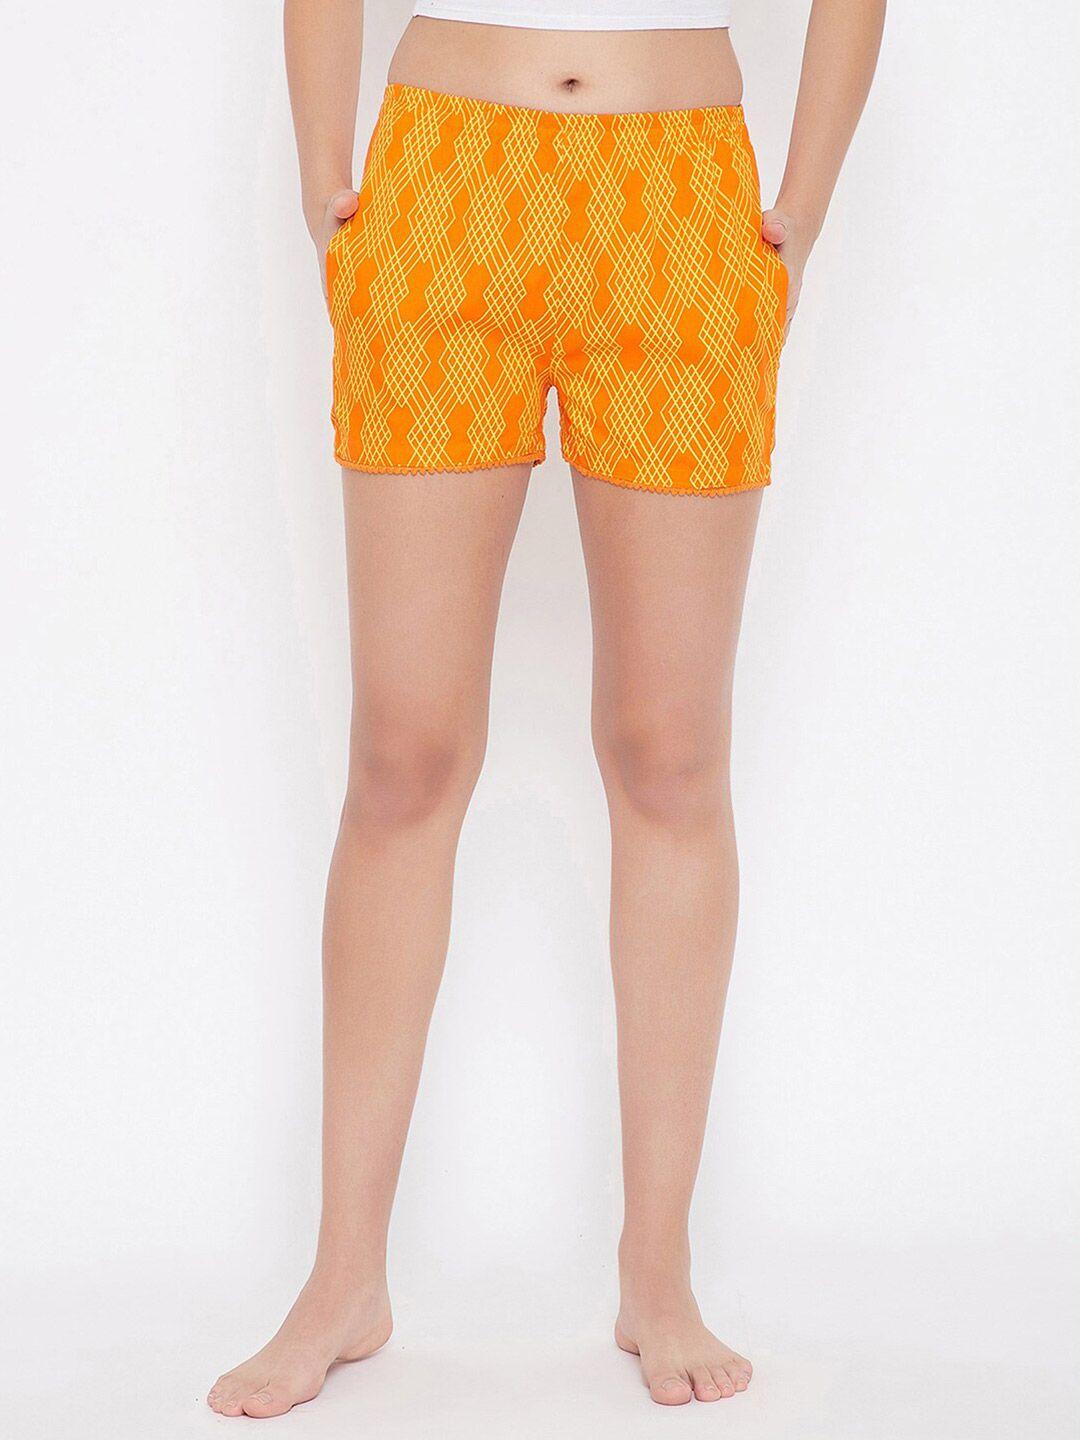 clovia women orange & yellow printed cotton lounge shorts lb0194e16xxl